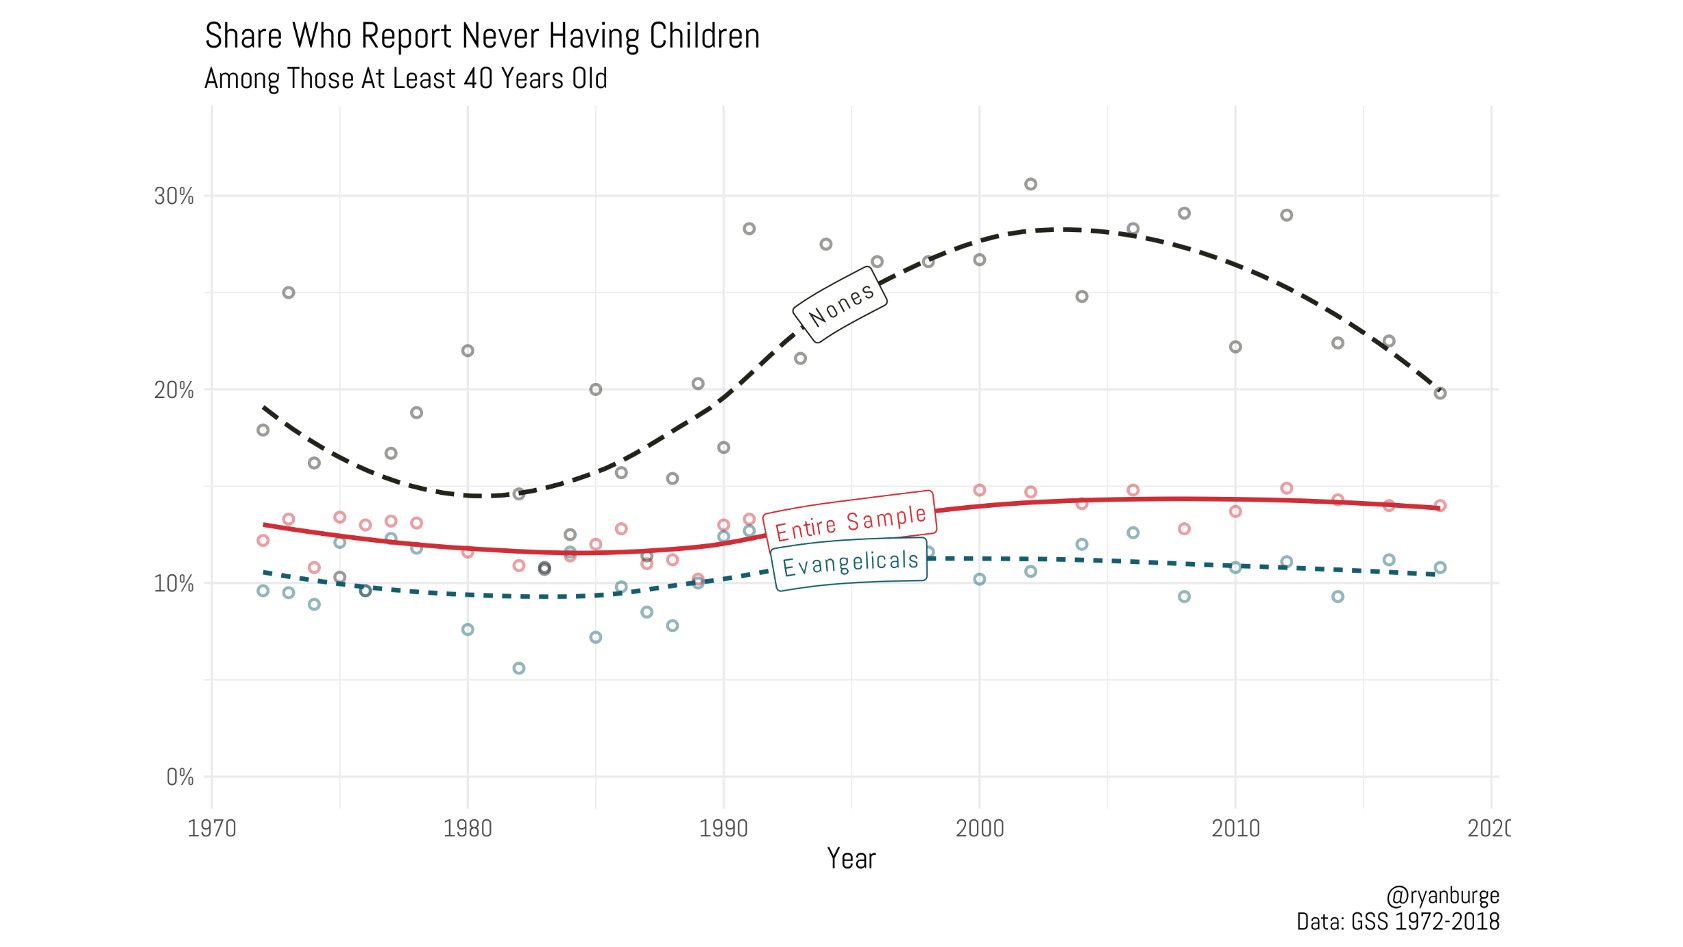 "Share Who Report Never Having Children" Graphic courtesy of Ryan Burge